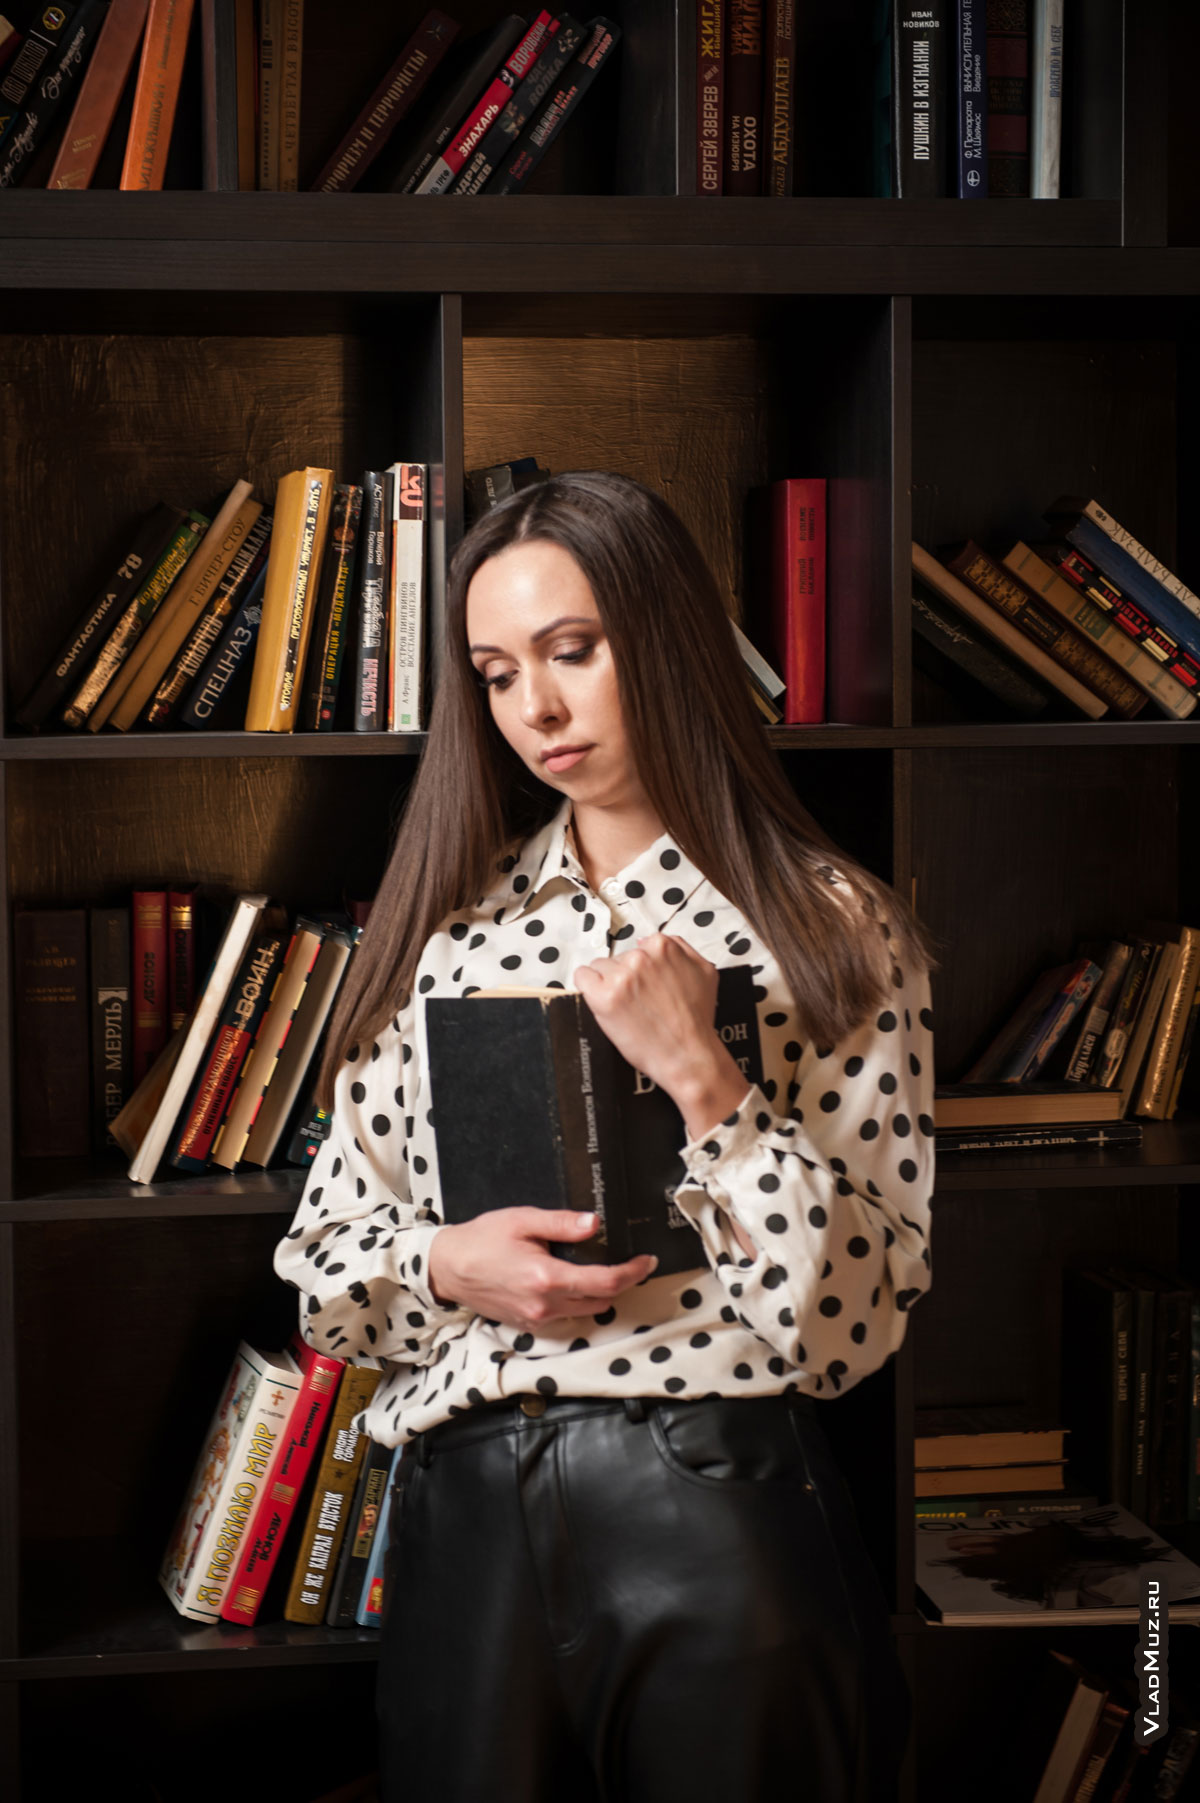 Фото девушки с книгой в руках на фоне книжного шкафа